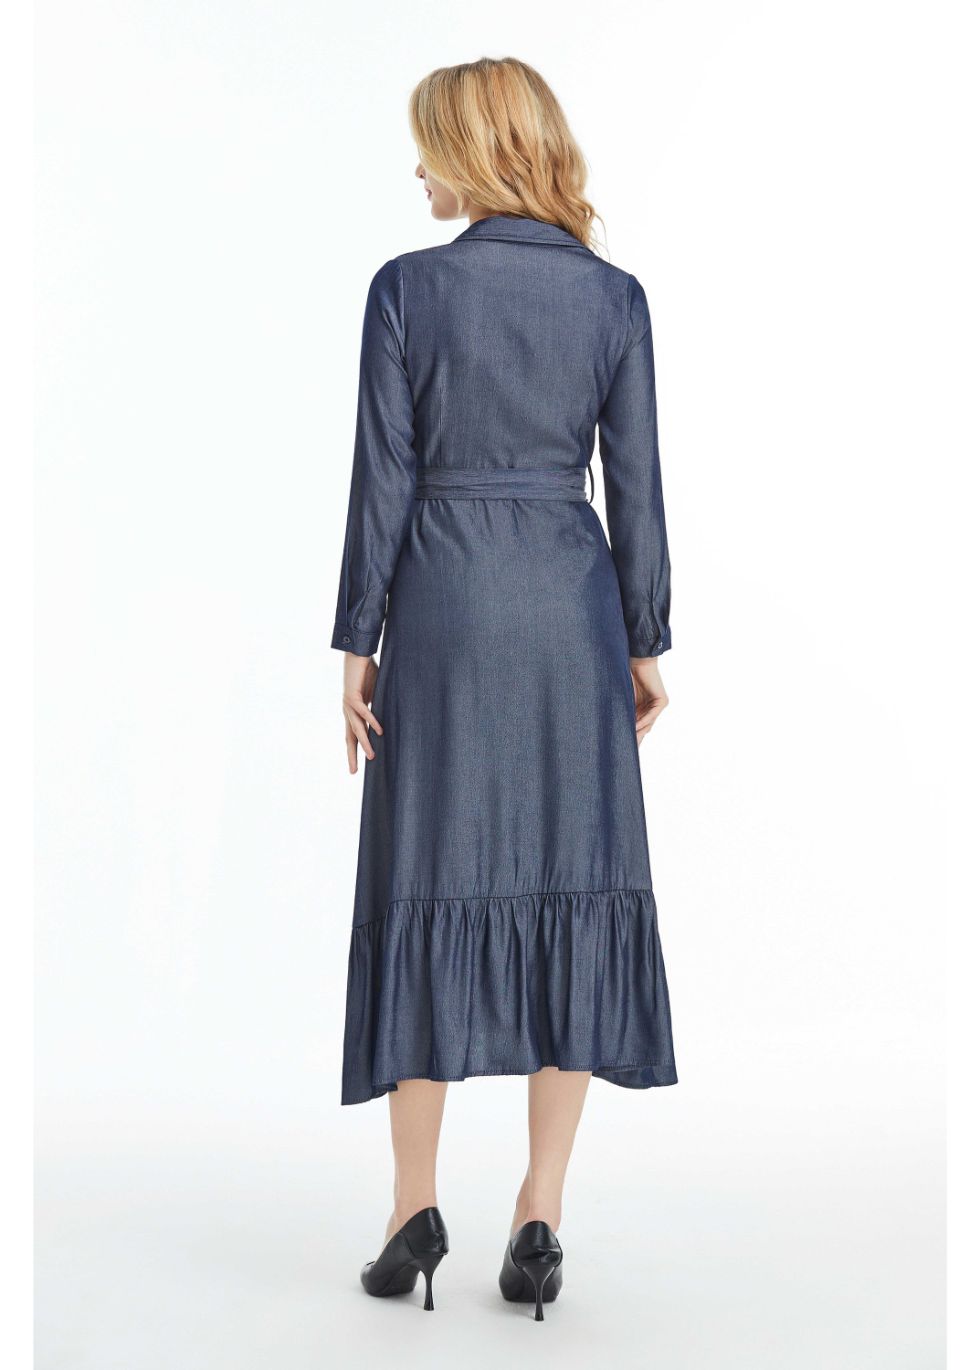 Denim Look Midi Dress with Cuffed Sleeves - MissFinchNYC